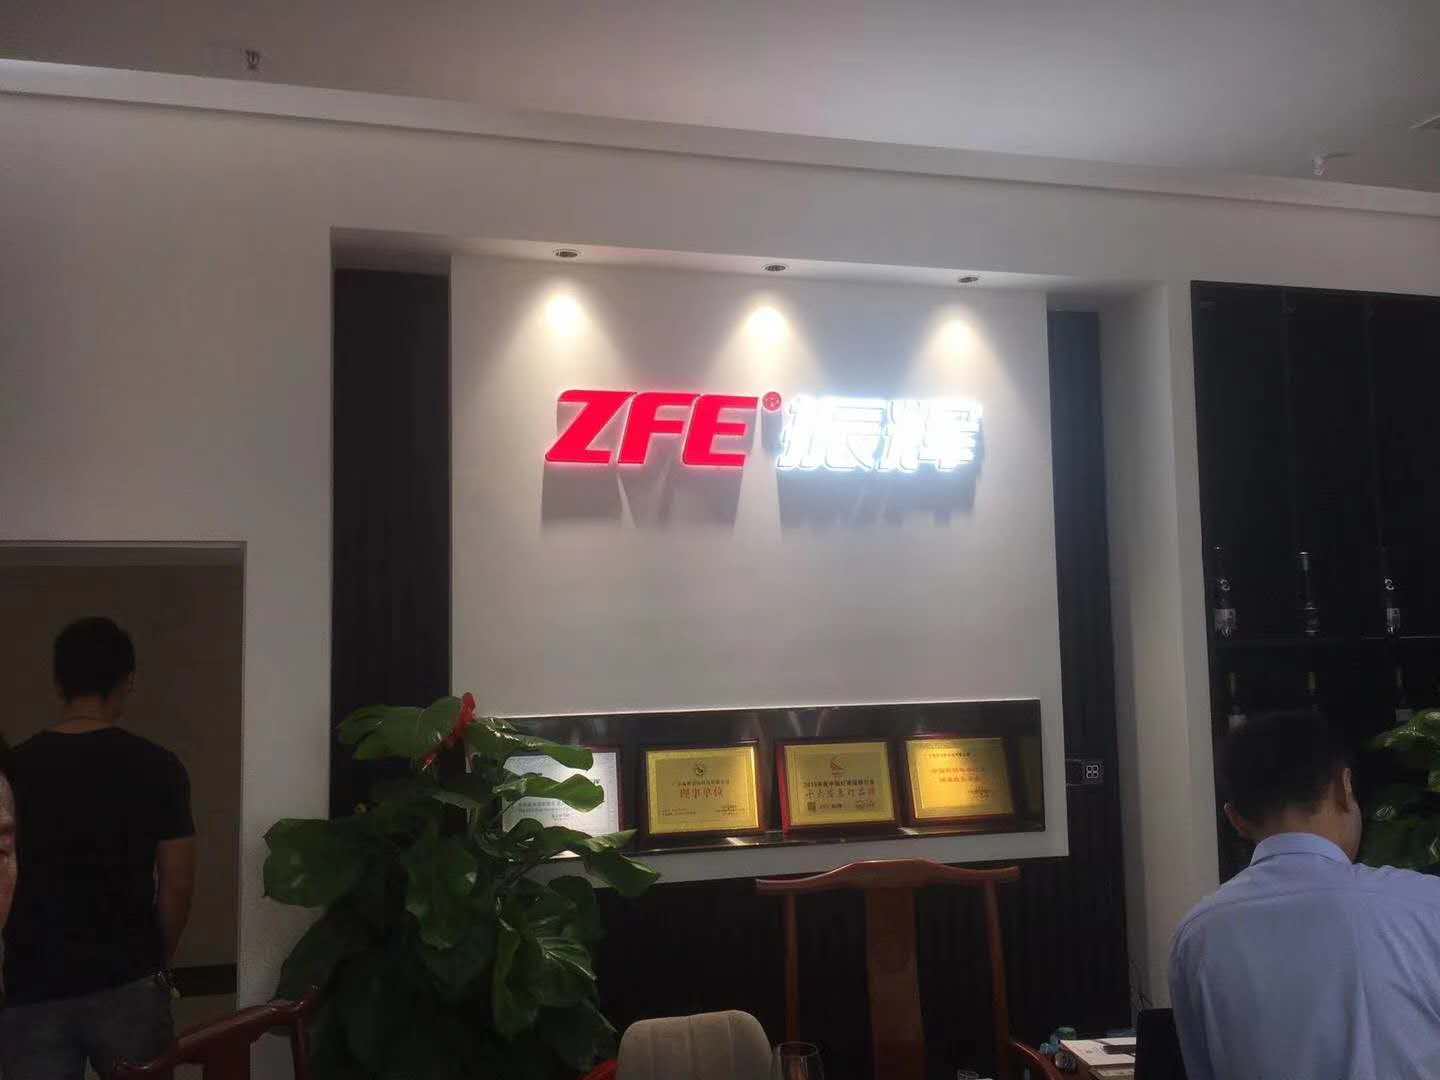 ZFE εταιρεία - κατάστημα Guzhen στις 9 Οκτωβρίου, δοκιμαστική λειτουργία, καλώς ήλθατε να επισκεφθείτε επιχειρηματικές διαπραγματεύσεις